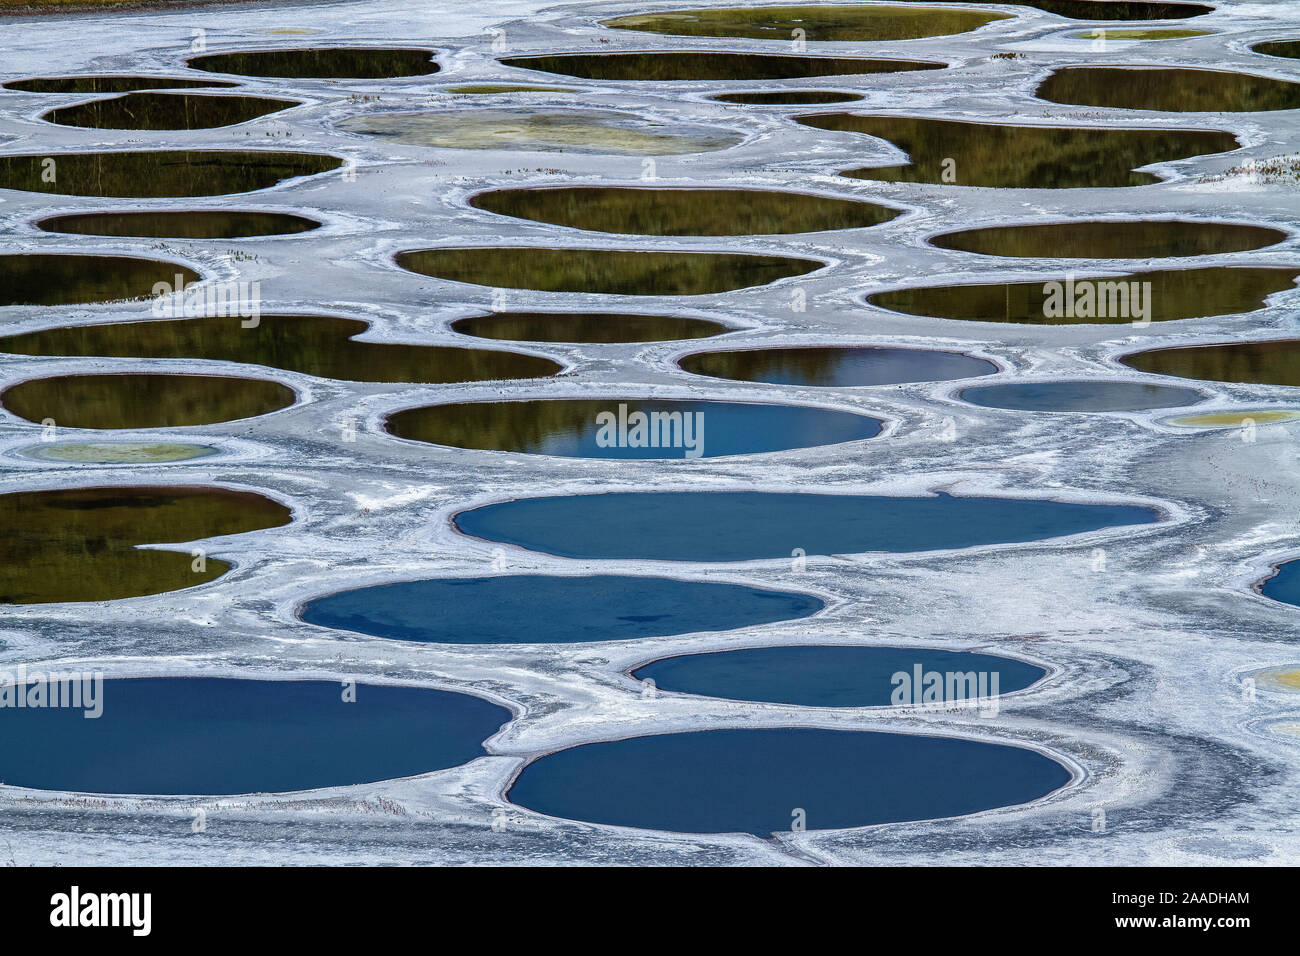 Spotted Lake, a saline endorheic alkali lake, a medicine lake for the Okanagan Syilx people, British Columbia, Canada, July. Stock Photo